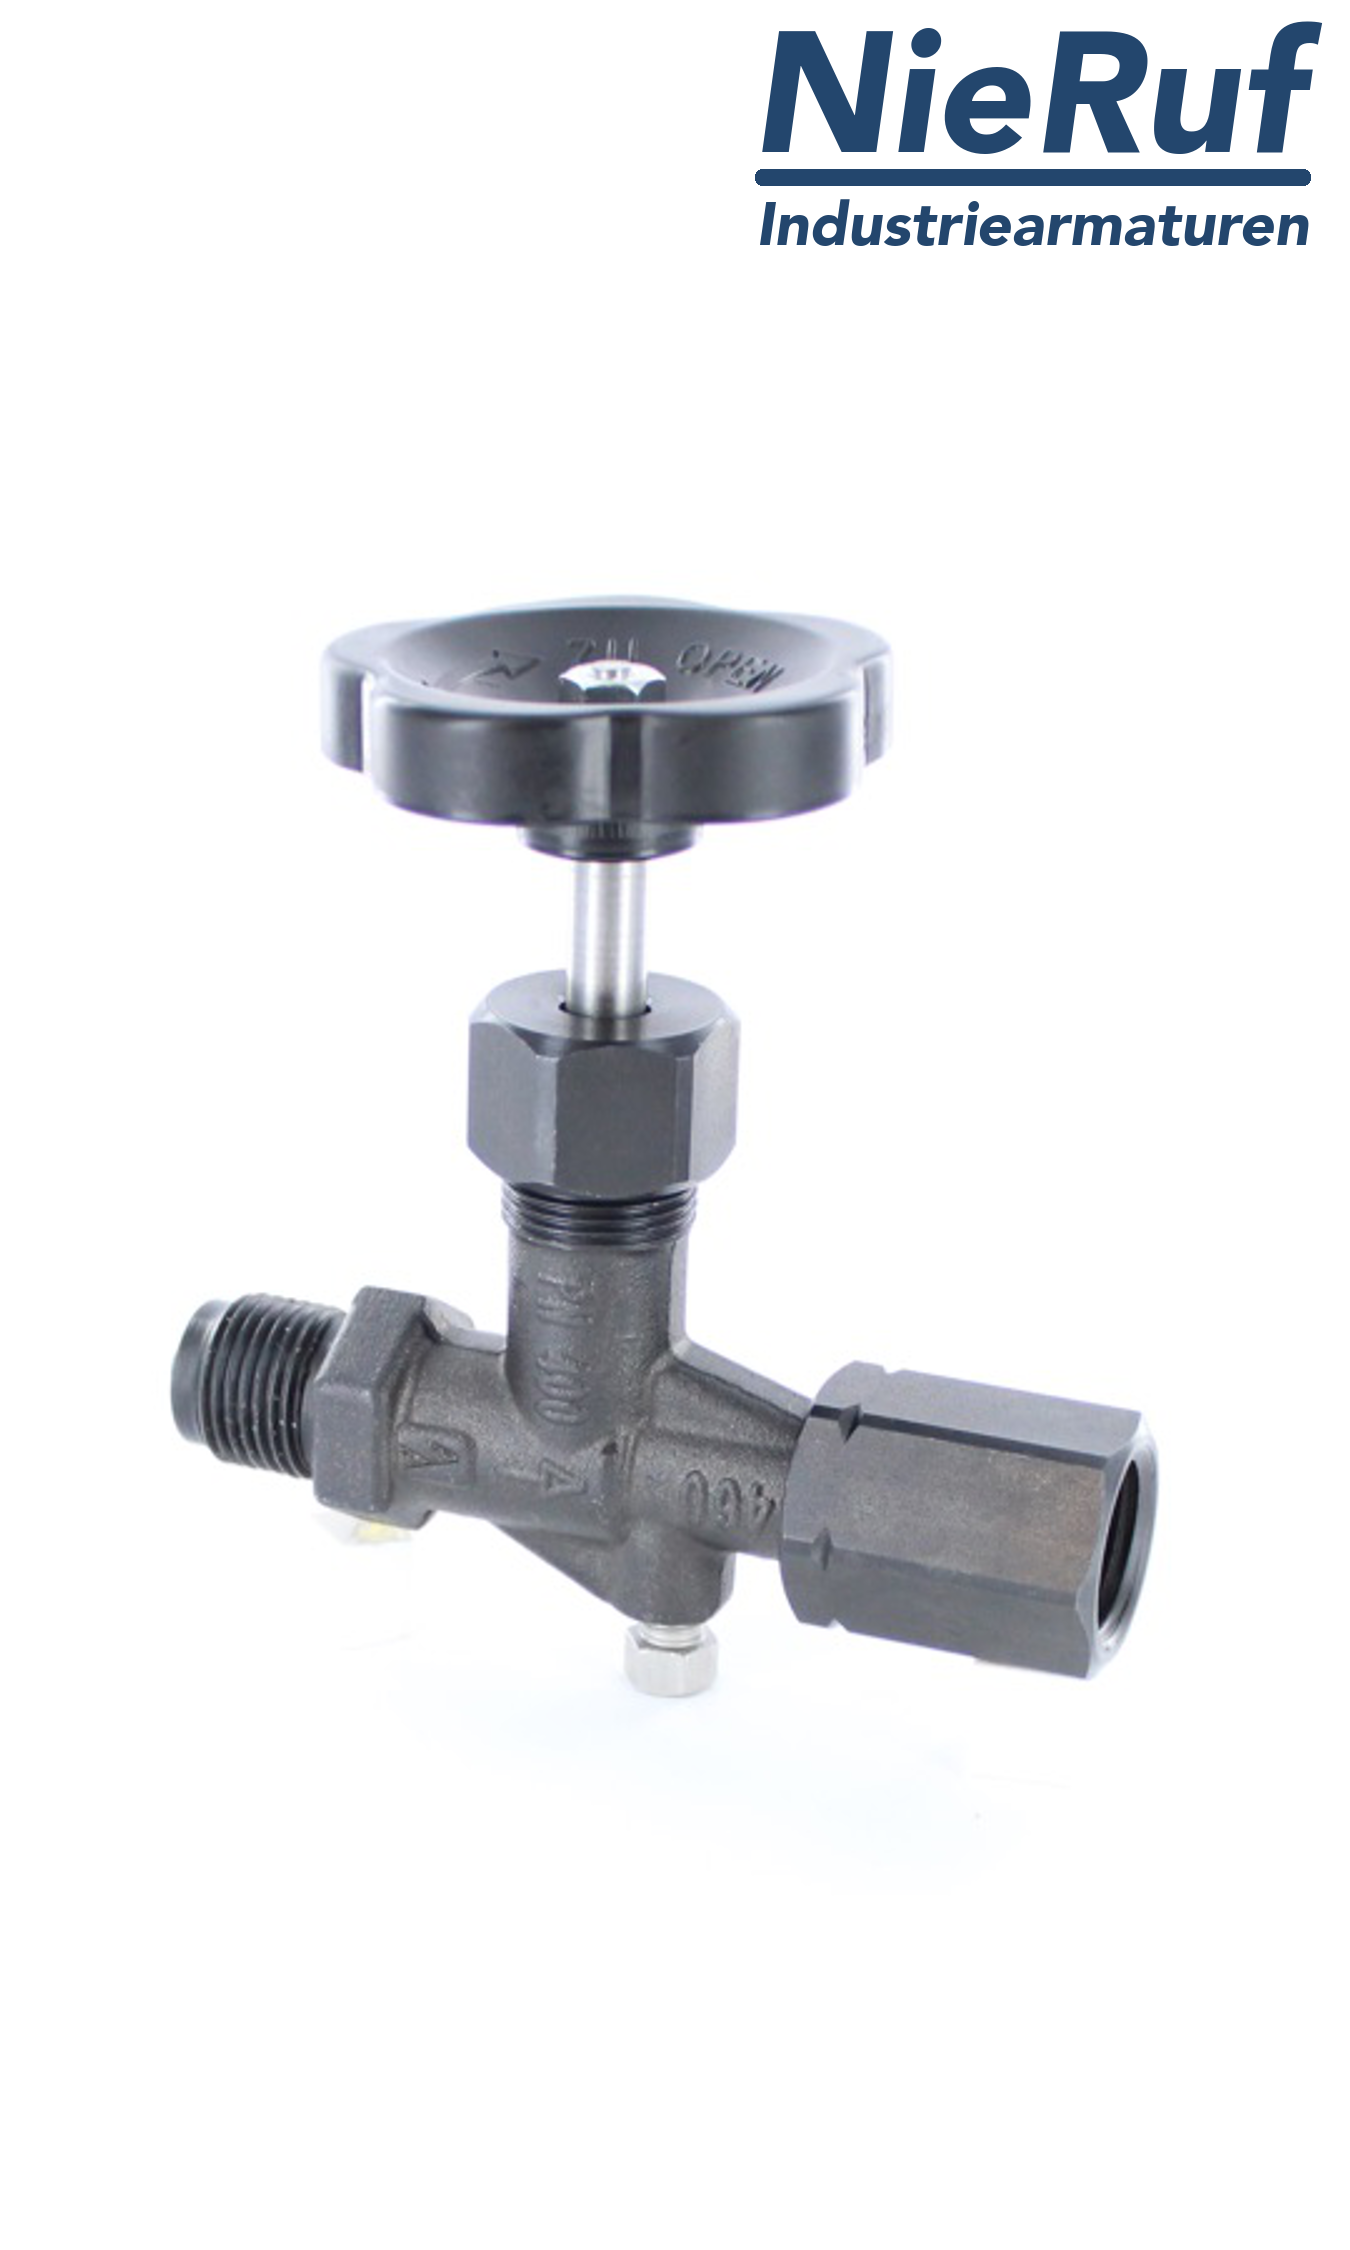 manometer gauge valves sleeve x sleeve DIN 16270 steel 1.0460 400 bar